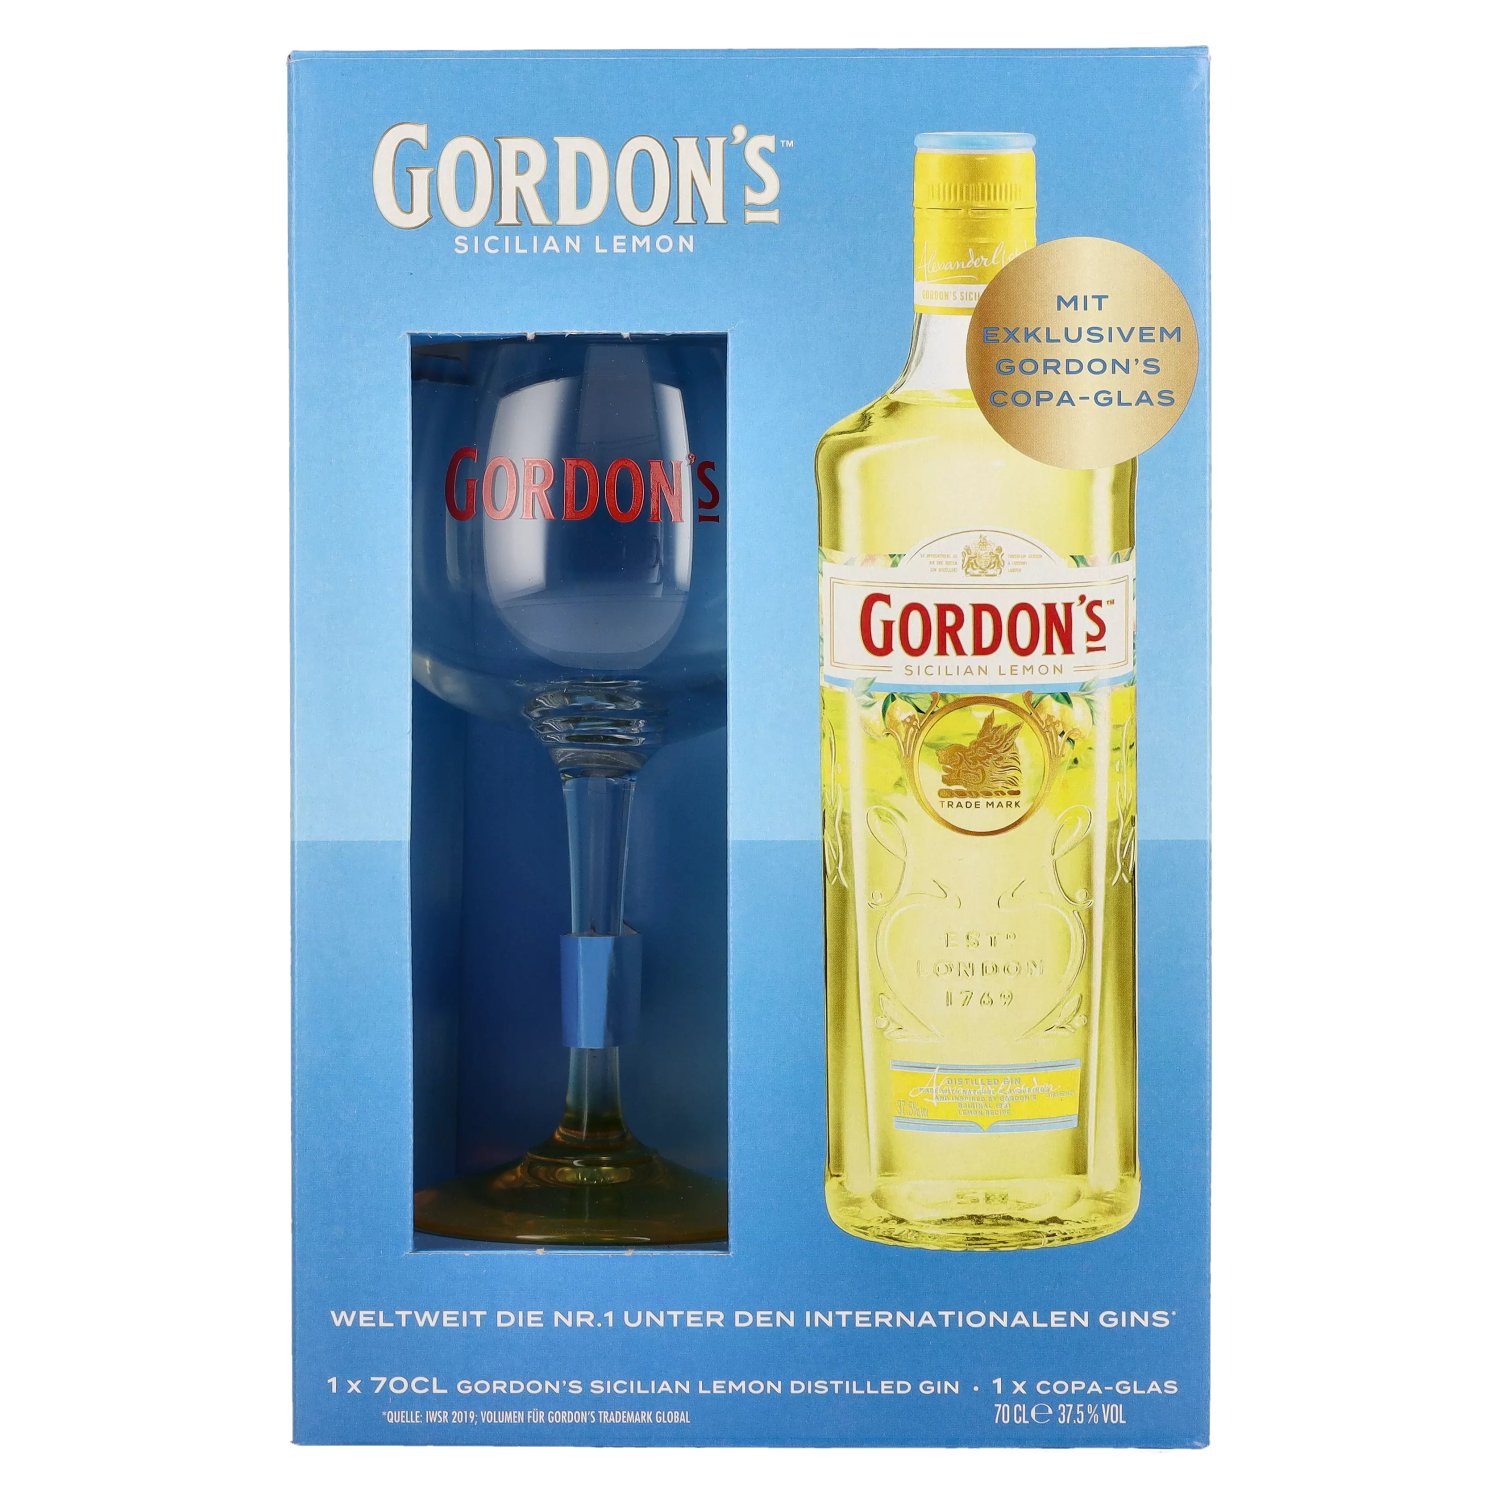 Gordon\'s SICILIAN LEMON Distilled Gin 37,5% Vol. 0,7l in Giftbox with glass